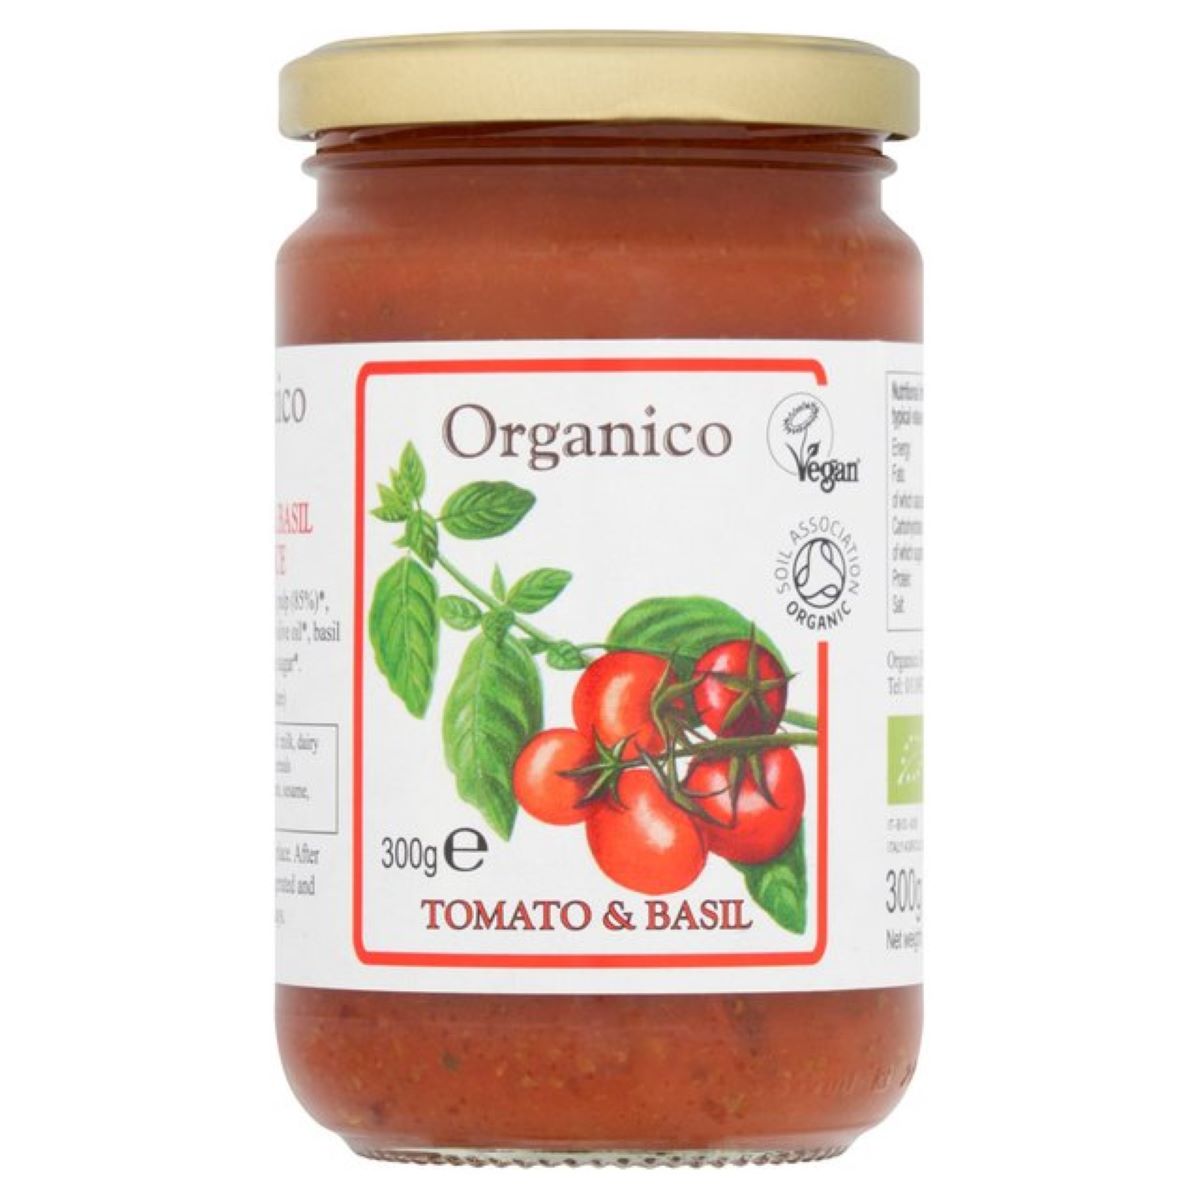 Organico Tomato & Basil Sauce 300g